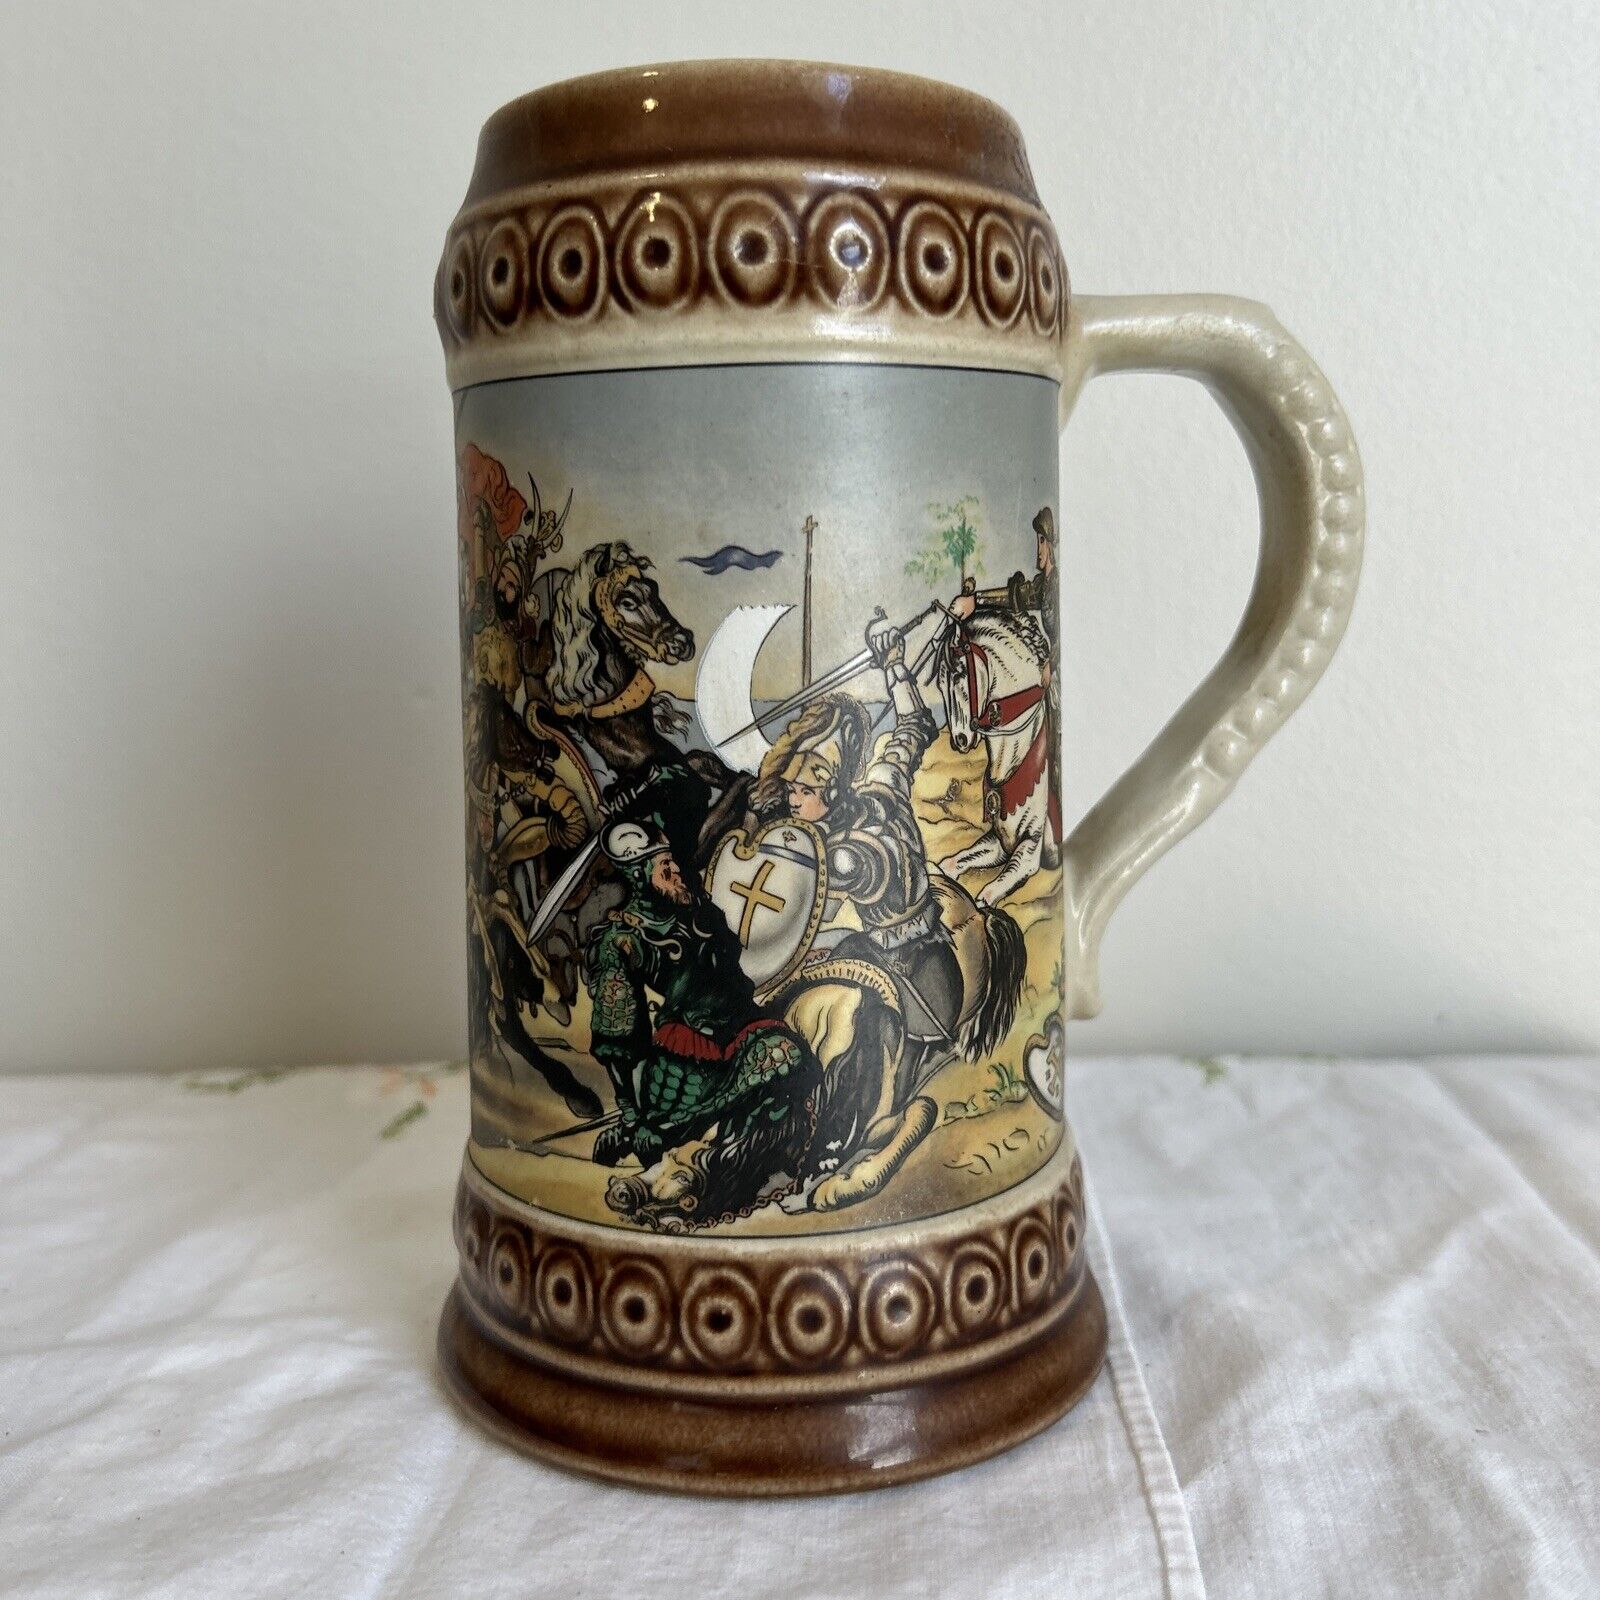 German Pictorial Middle Ages Medieval Stein Mug